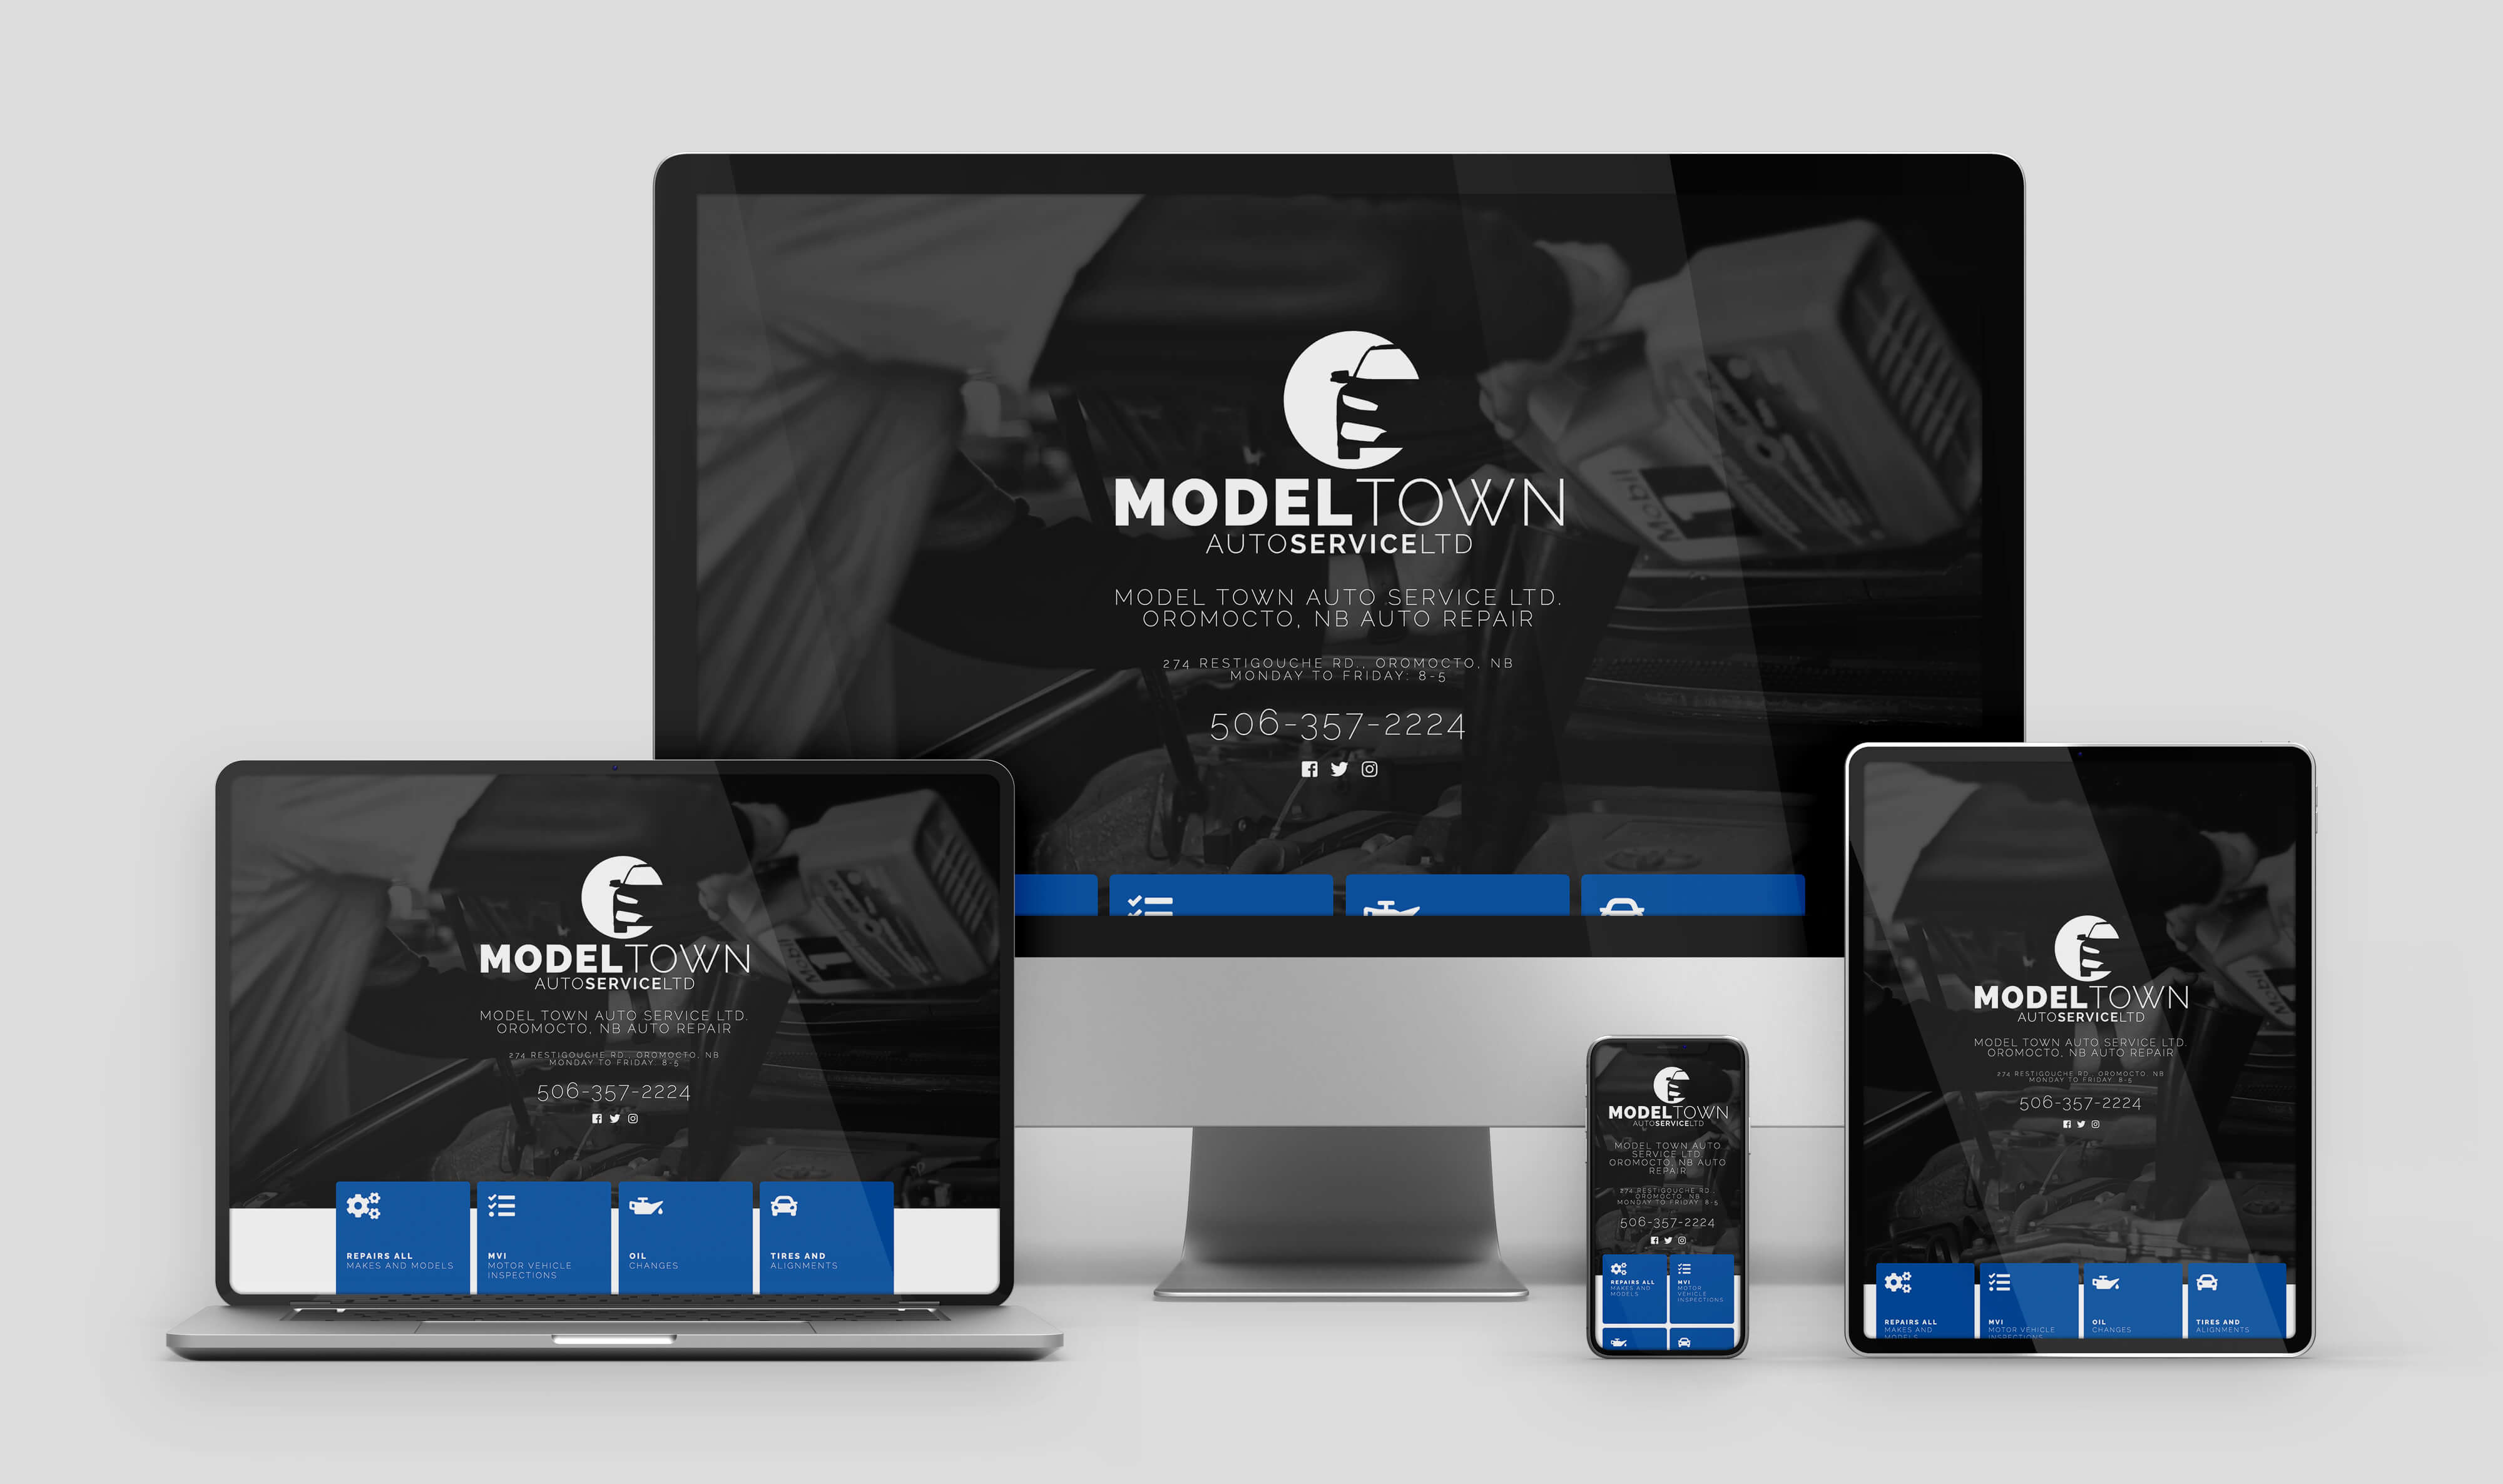 Model Town Auto Service Ltd. design on multiple devices